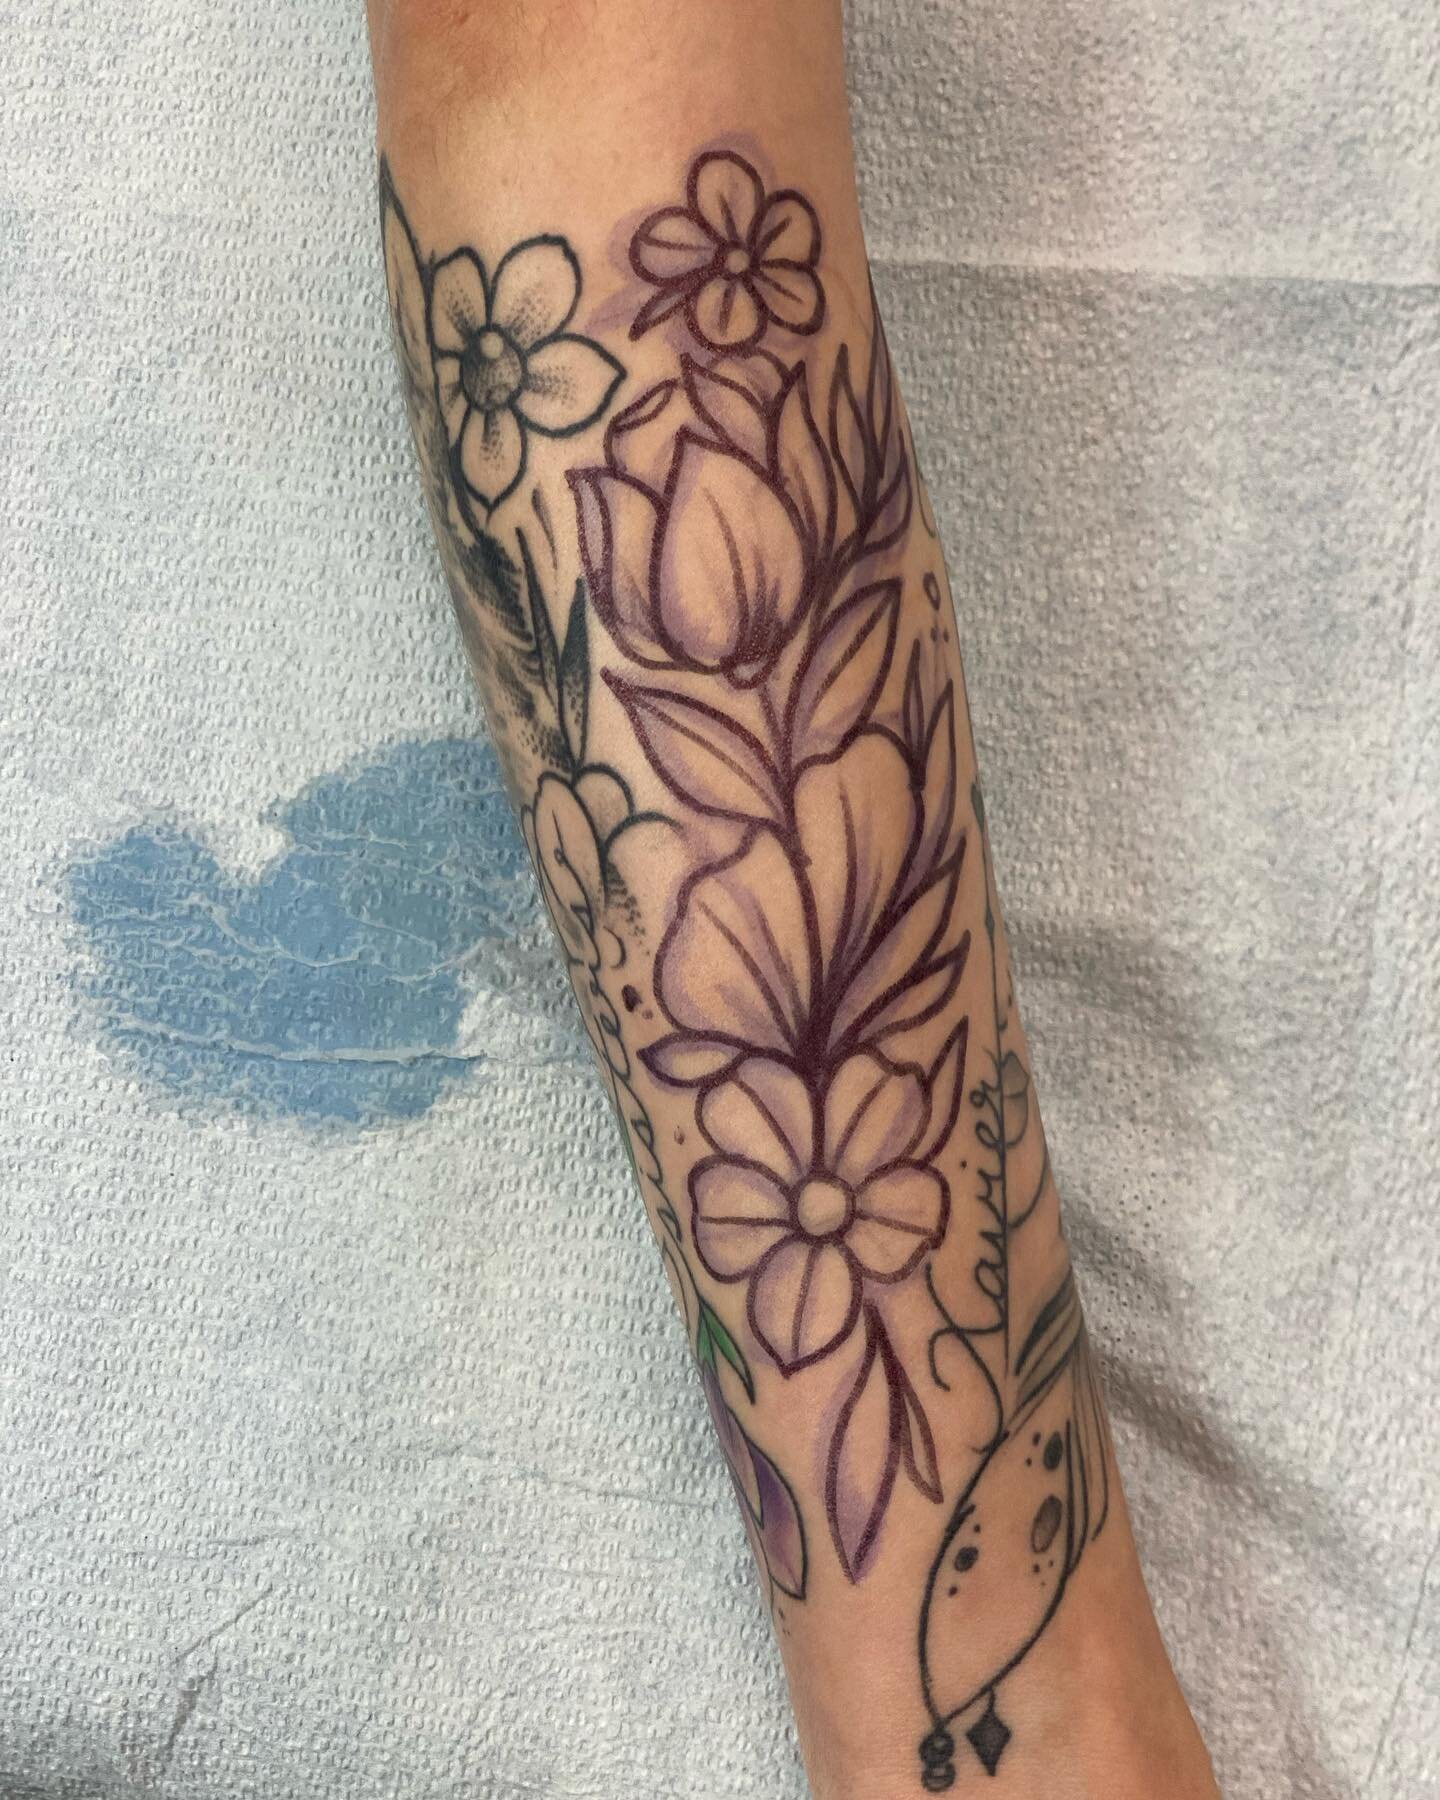 Love free handing flower to fill gaps !! #flowers #flowertattoo #gapfiller #inked #blackandgreytattoo #floraltattoo #tattoos #tattooed #tattoogirl #freehand #tattooartist #artist #mn #minnesota #minneapolis #burnsville